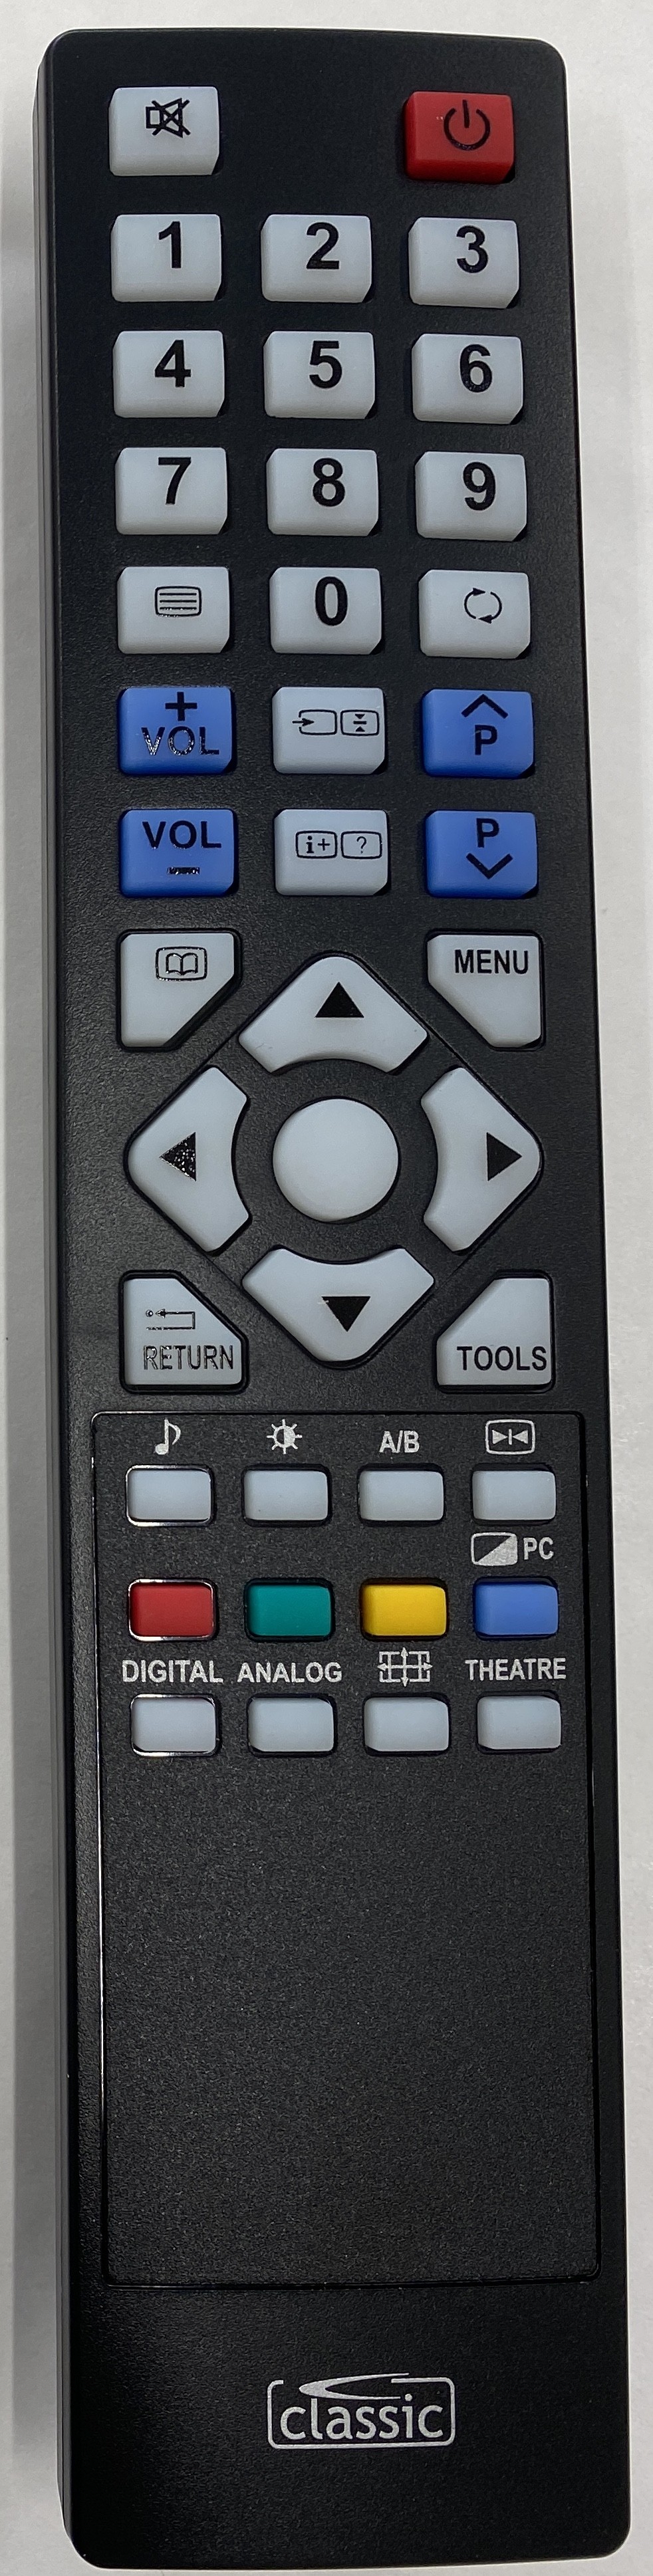 SONY RM-ED006 Remote Control Alternative